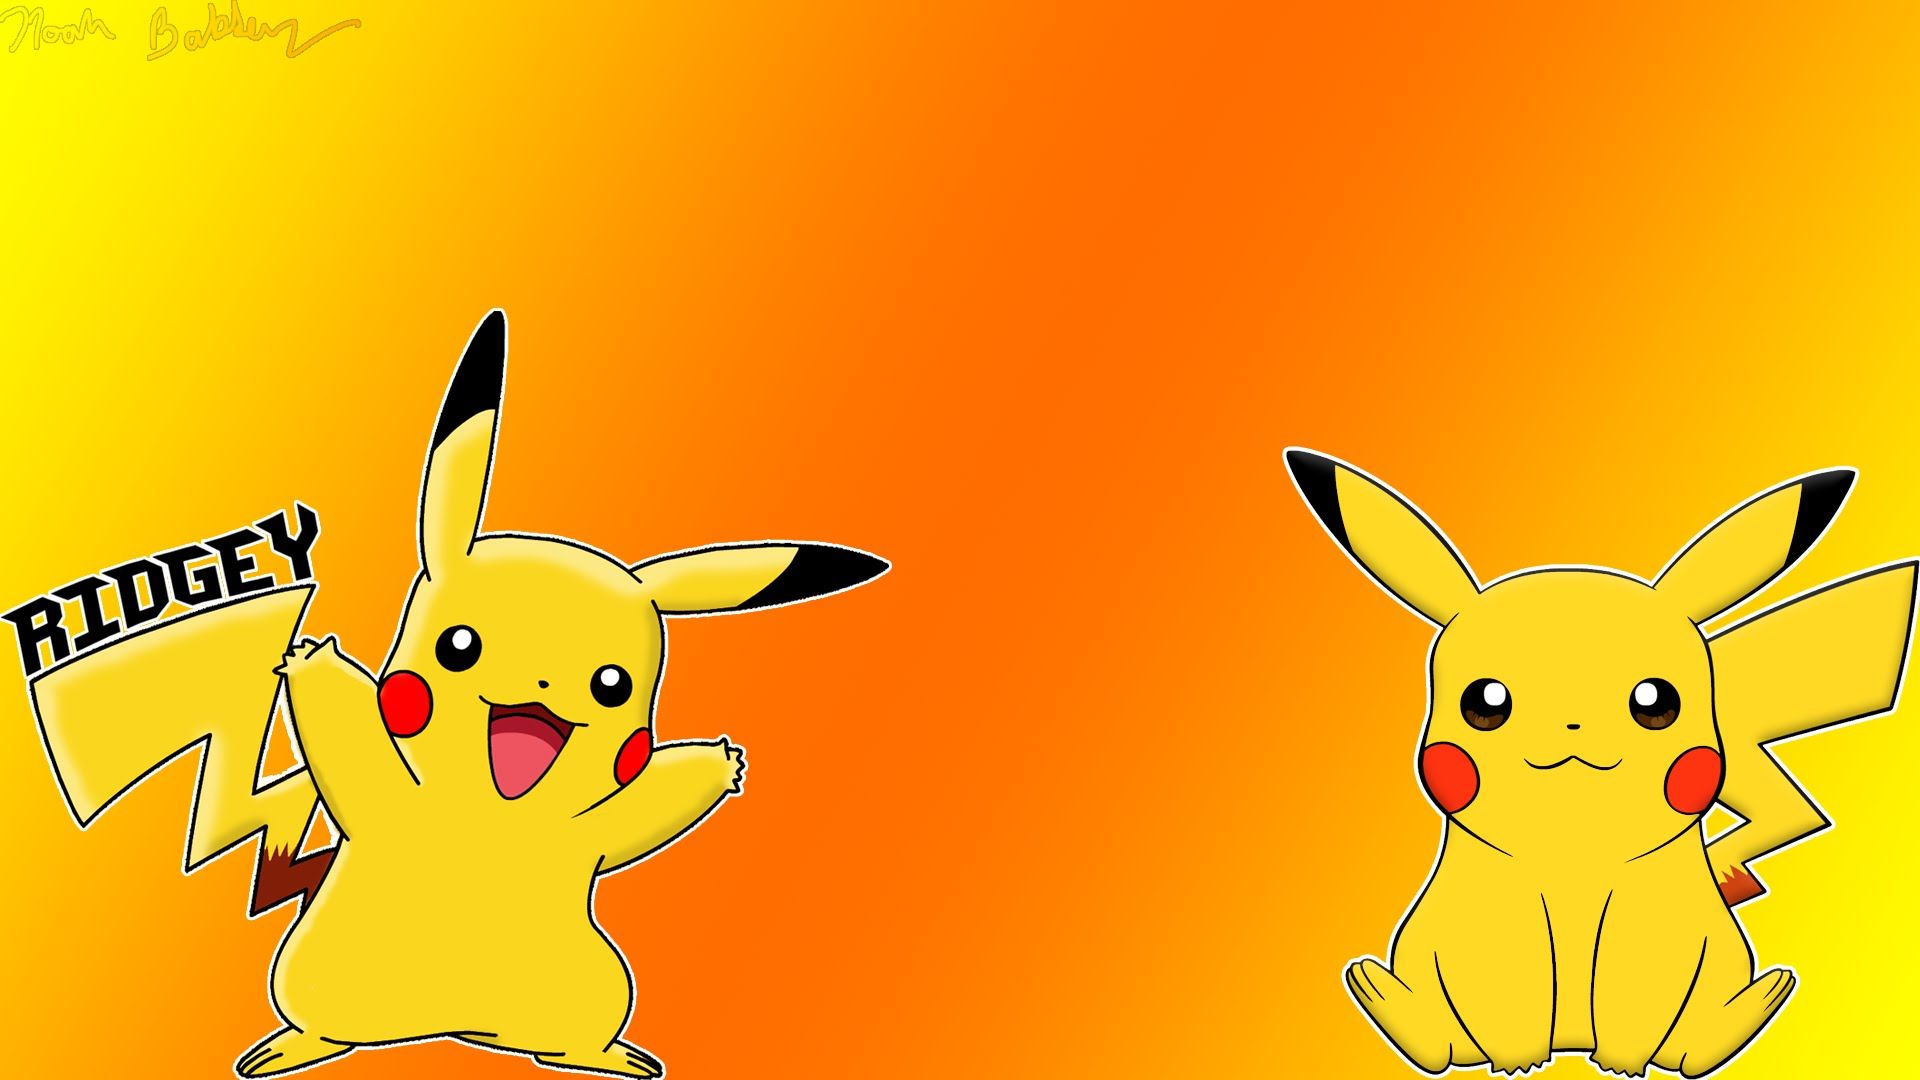 Free download Pikachu background